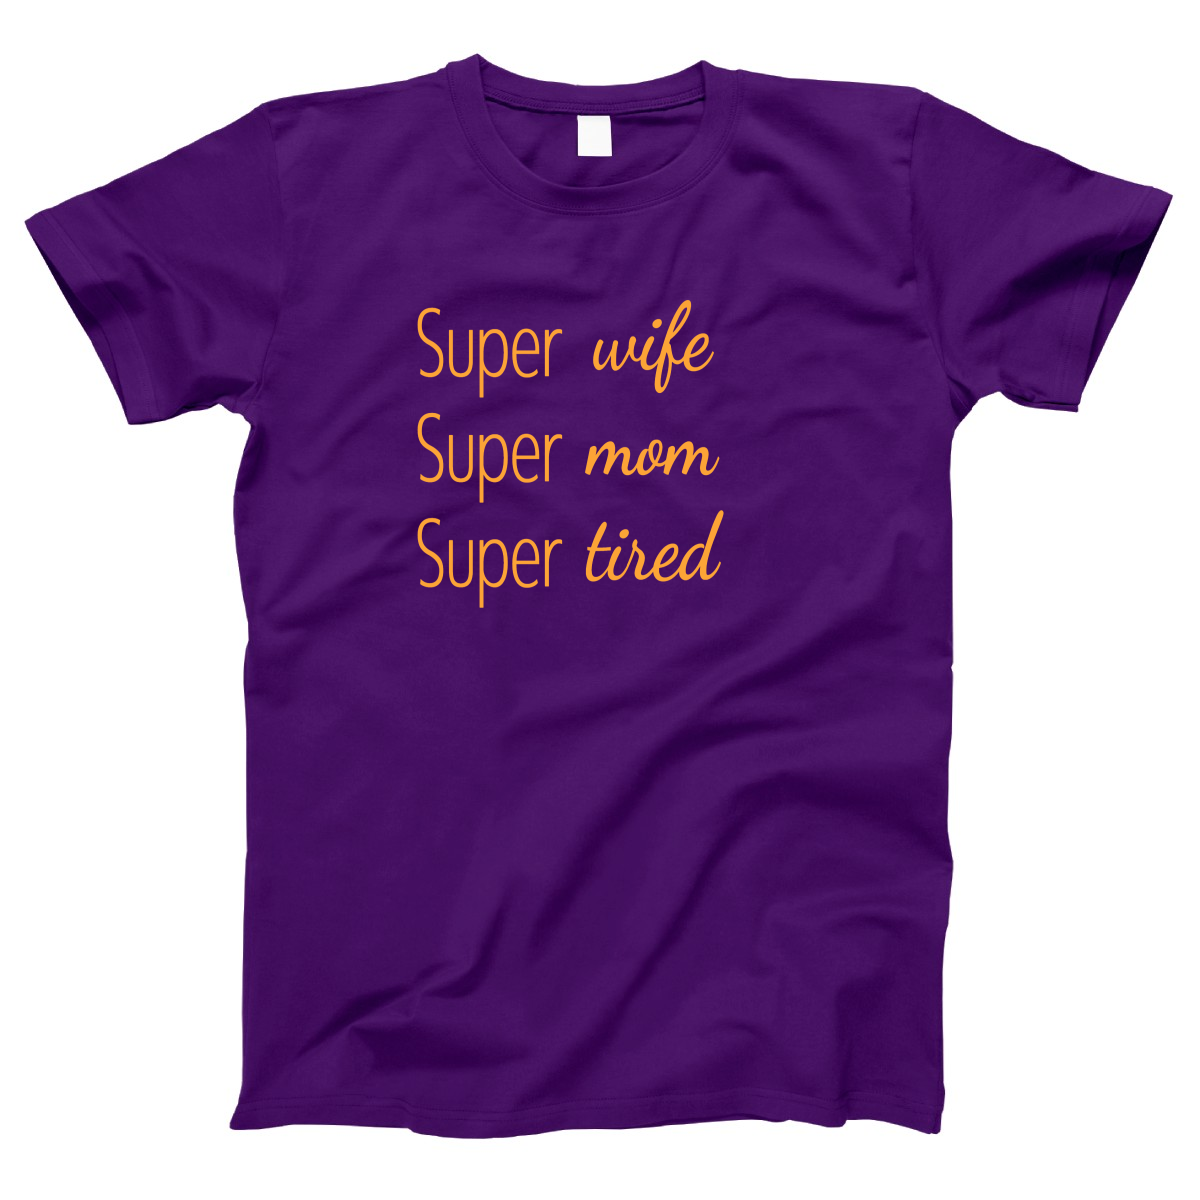 Super Mom Super Wife Super Tired Women's T-shirt | Purple